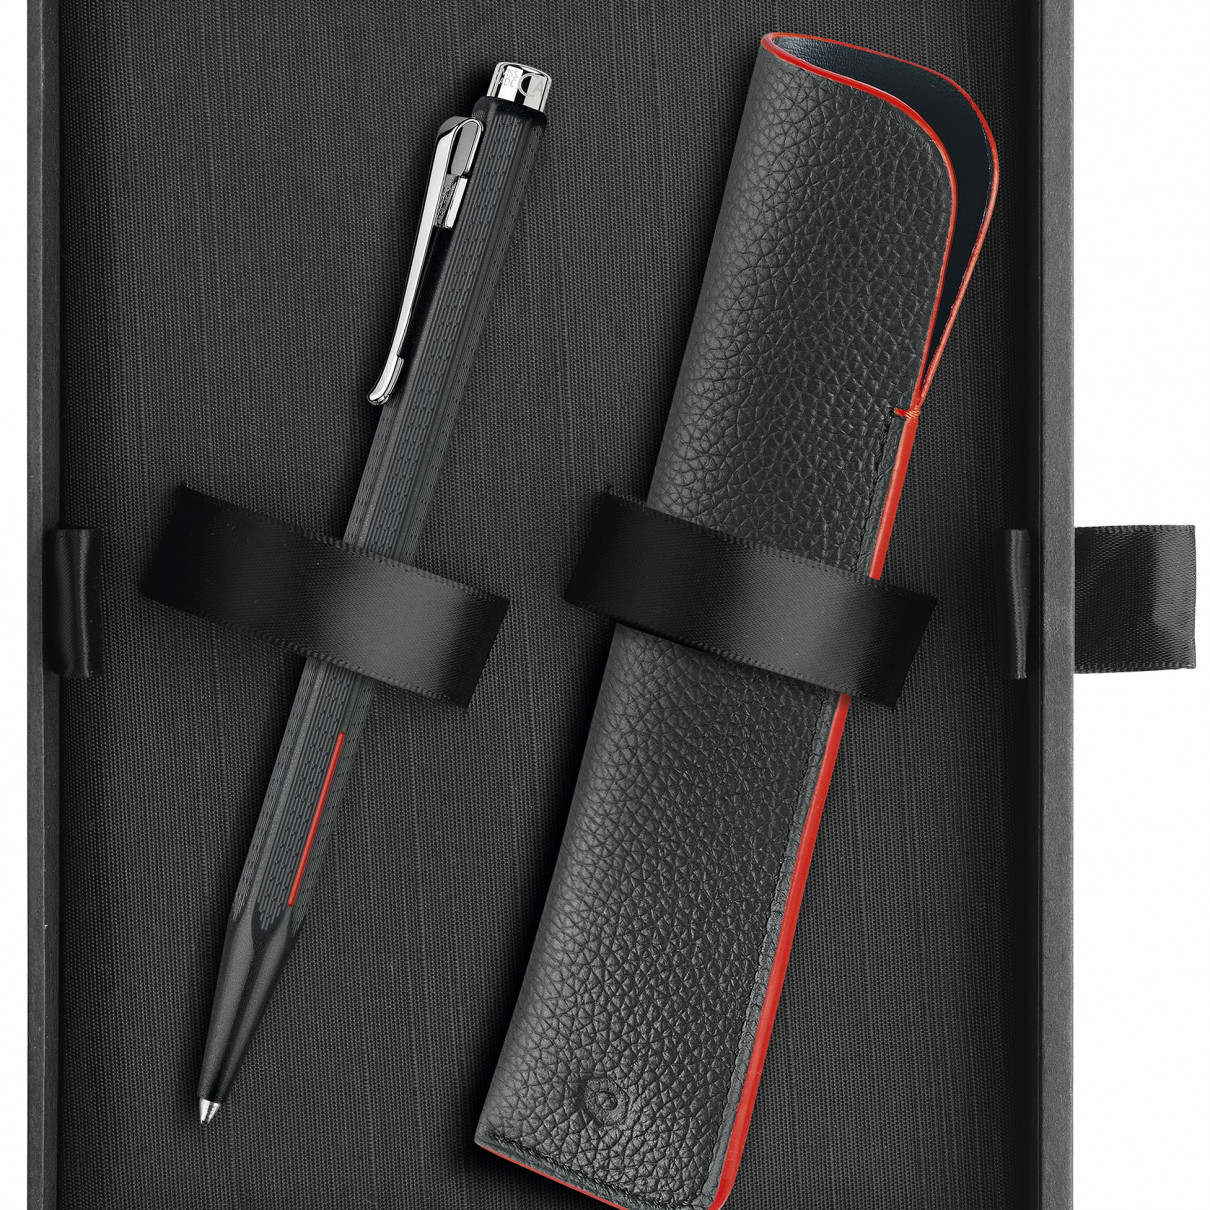 Caran d'Ache Ecridor Ballpoint Pen & Leather Case Set - Racing